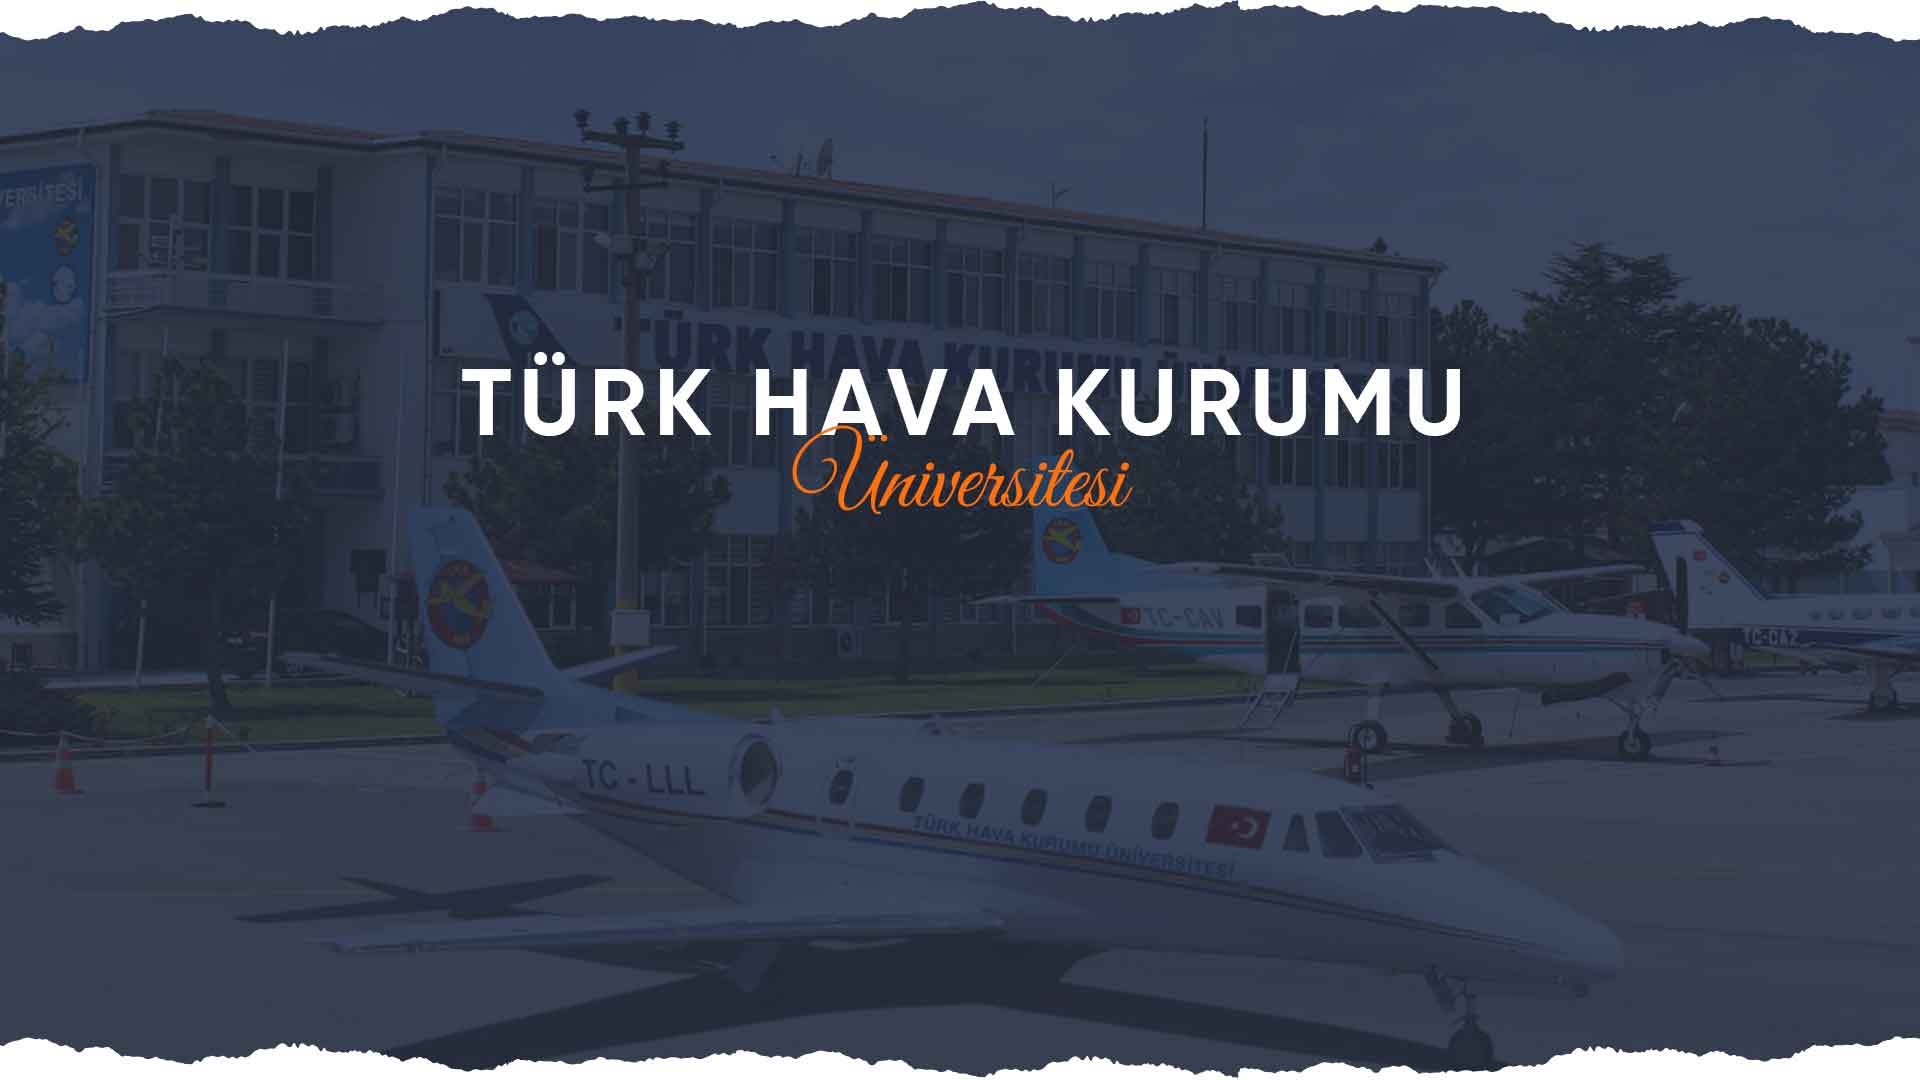 Turkish Aeronautical Association University